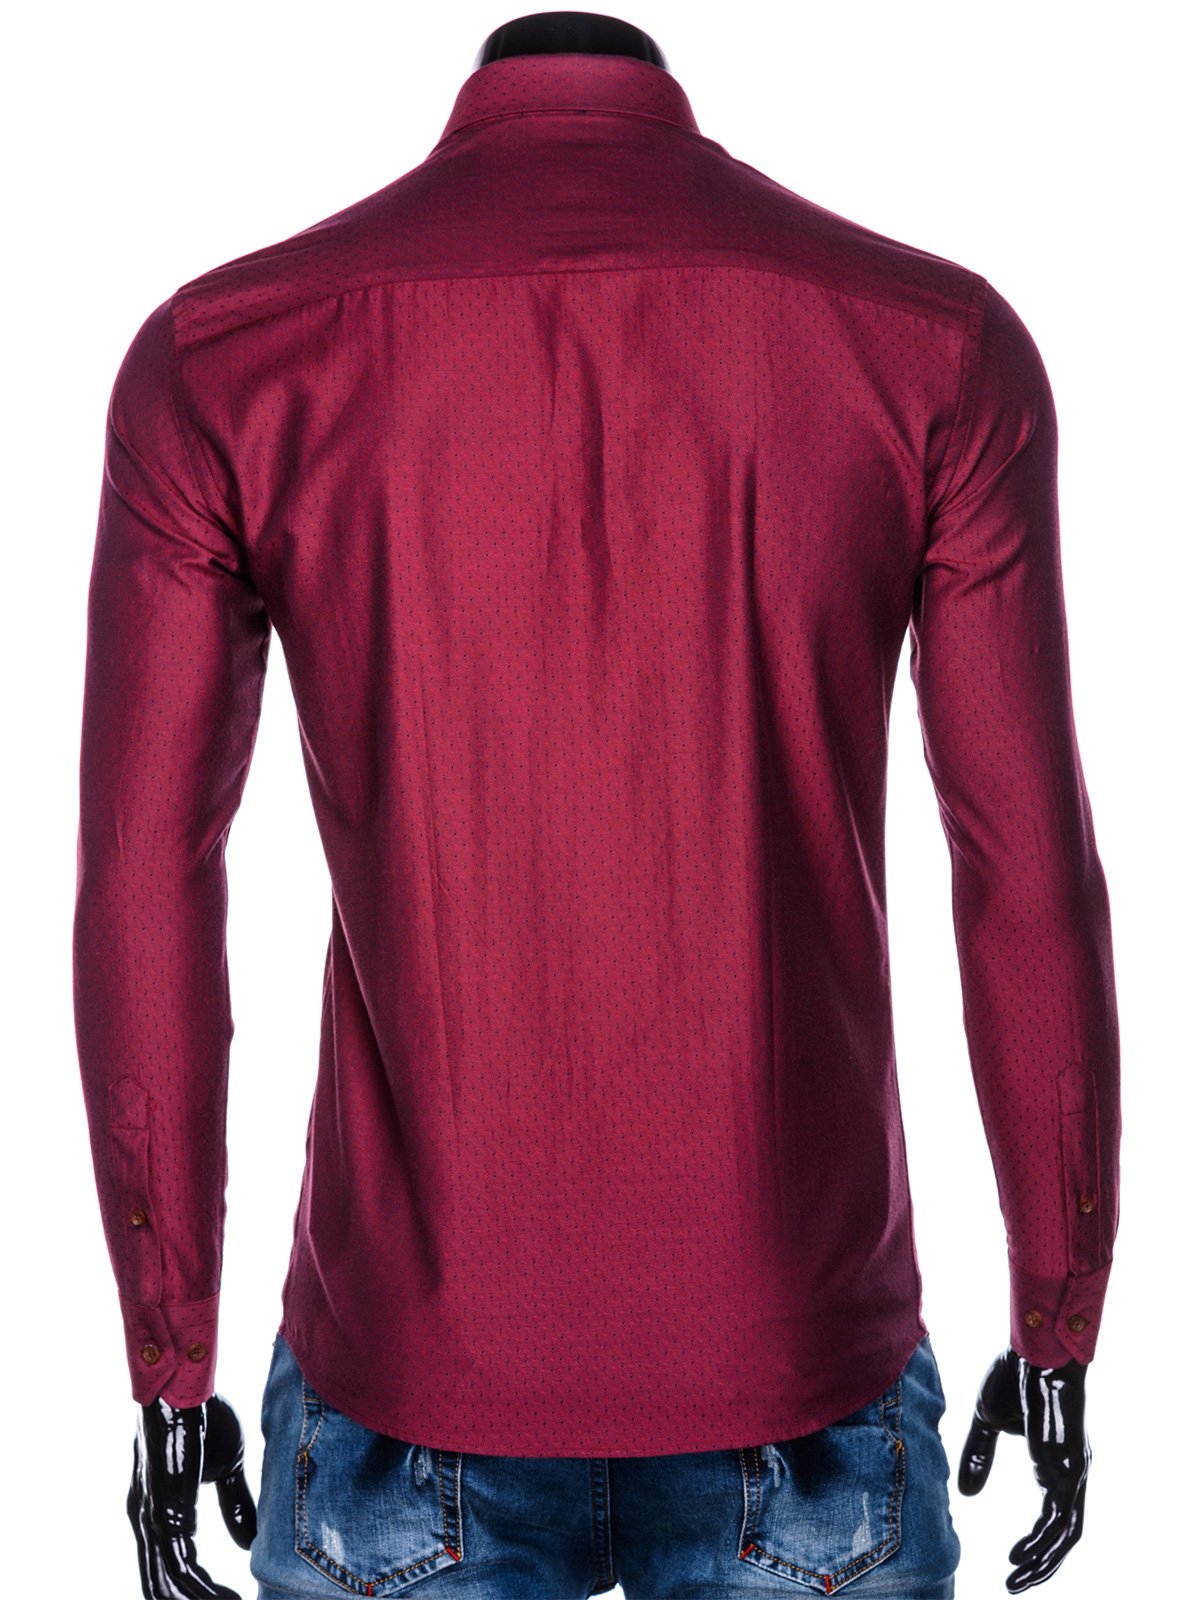 Men's elegant shirt with long sleeves K464 - dark red | MODONE ...